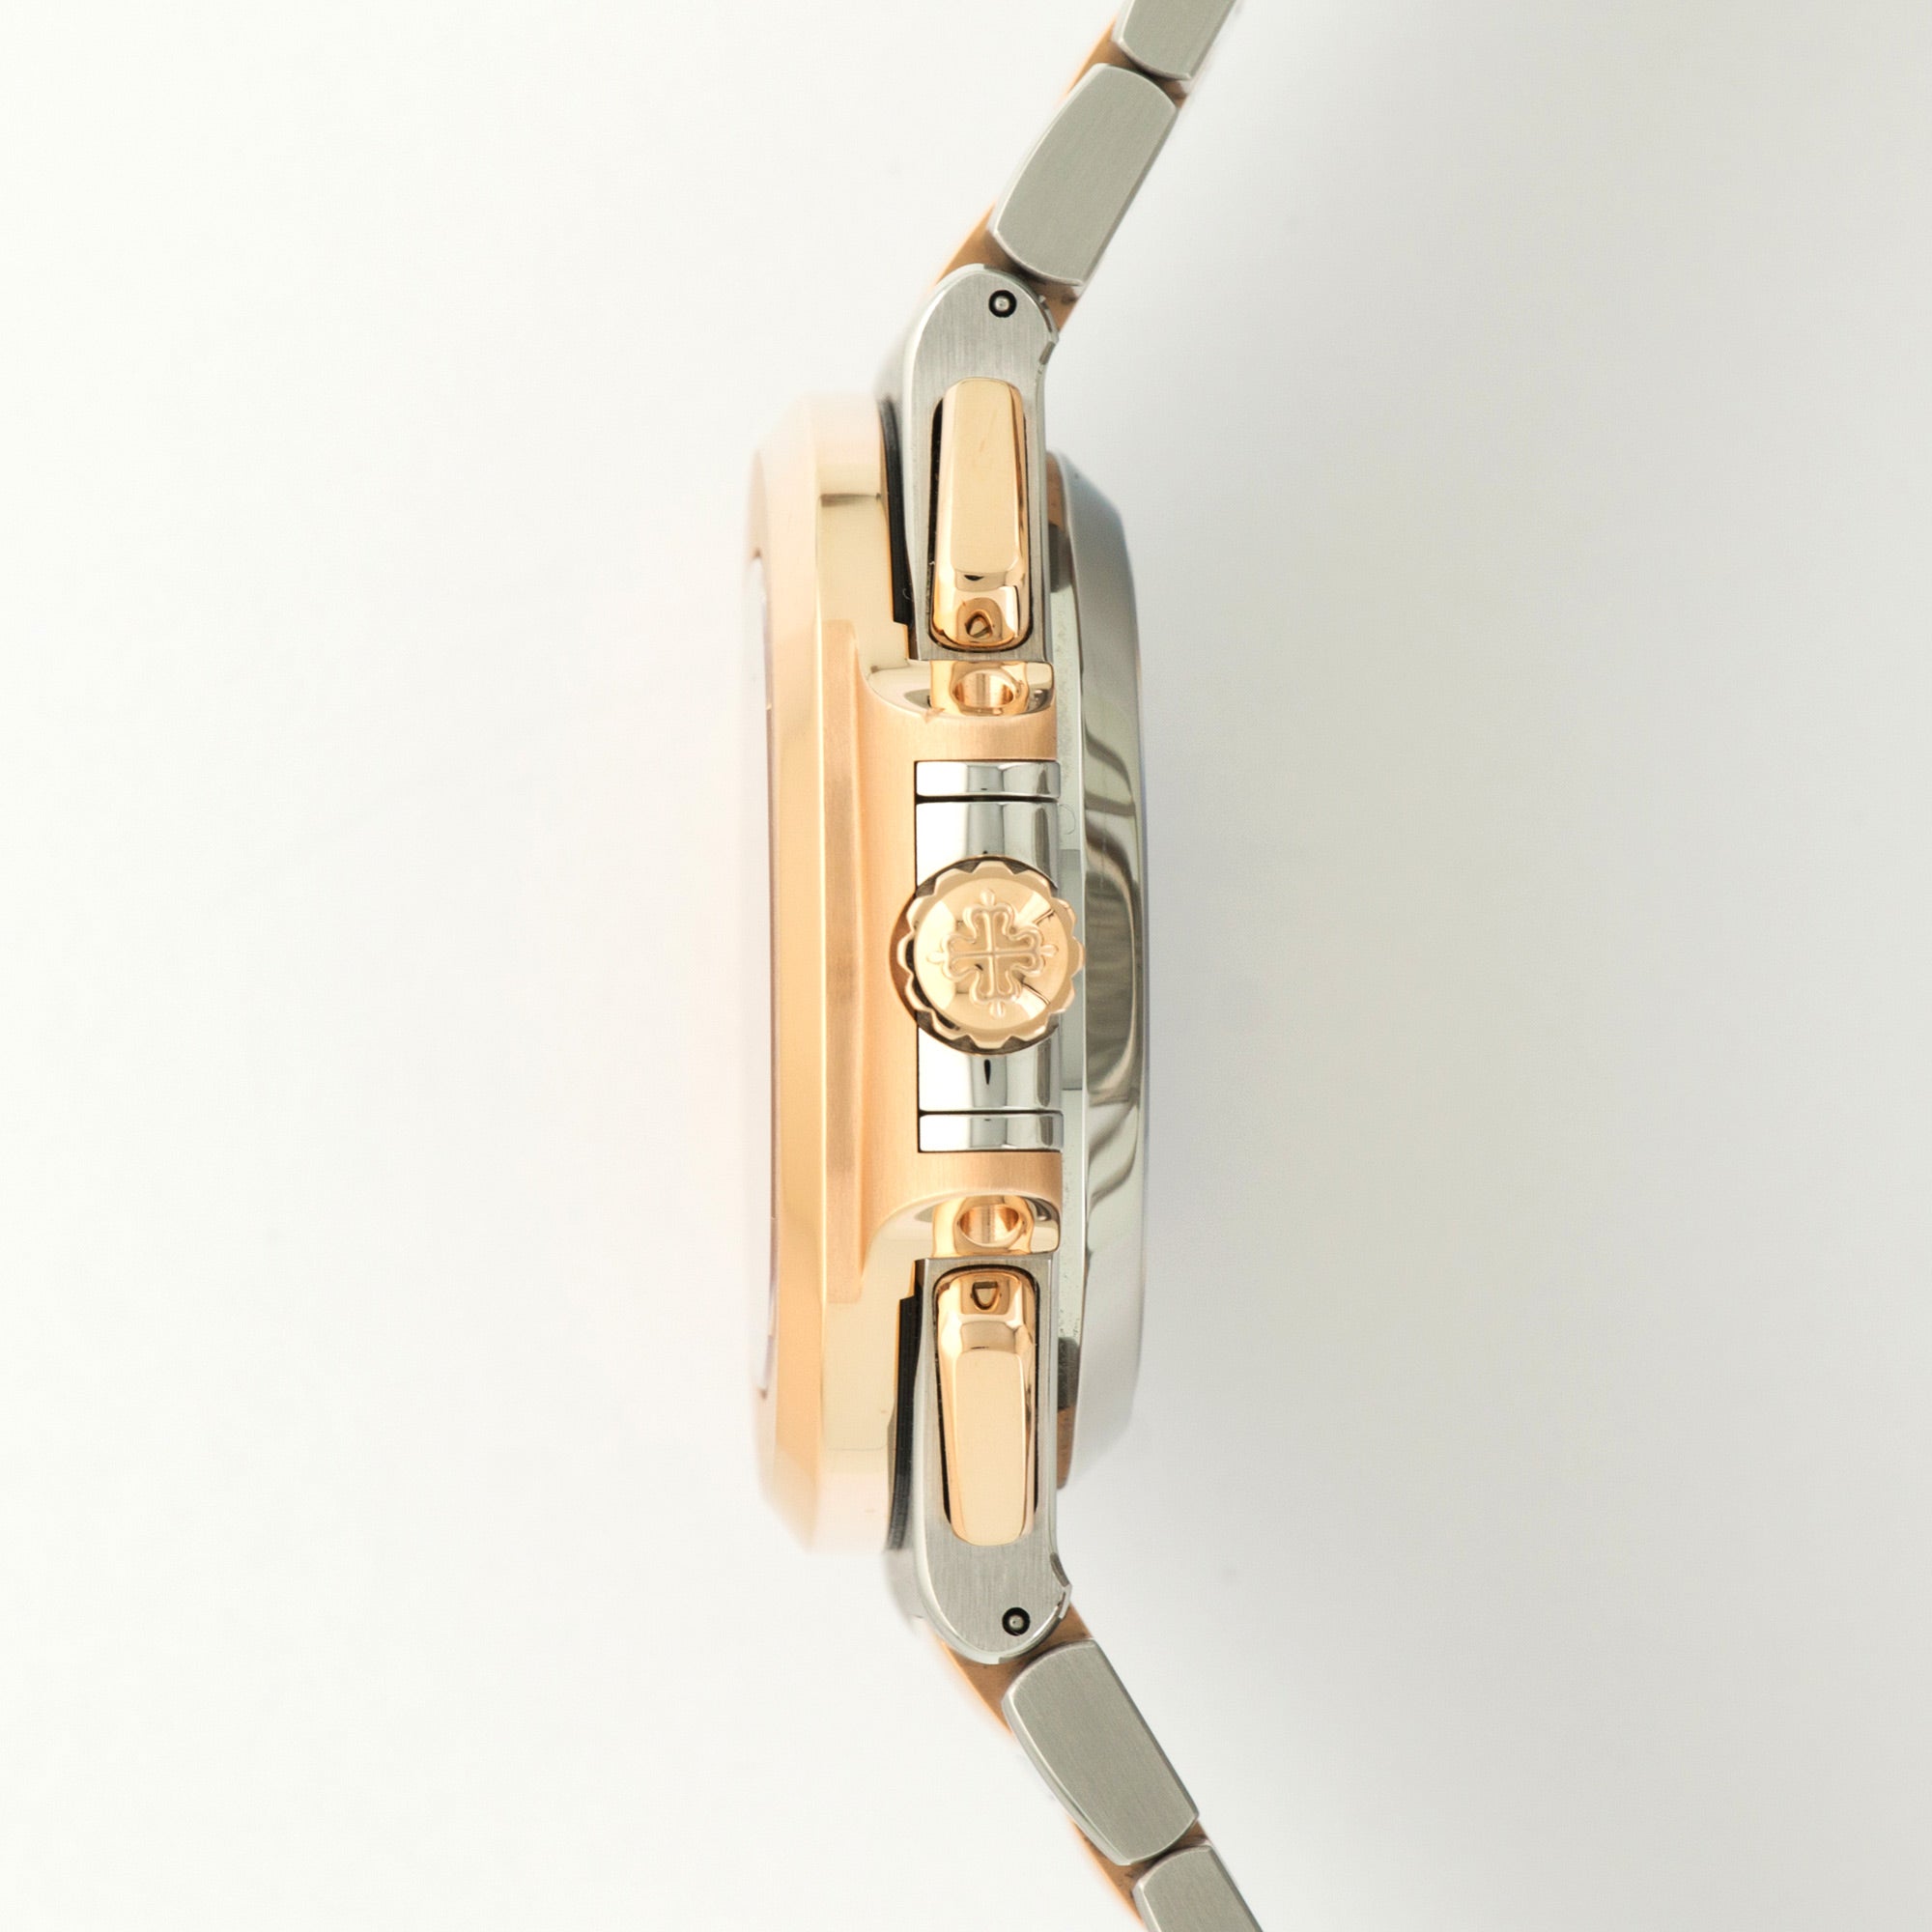 Patek Philippe - Patek Philippe Two-Tone Rose Gold Nautilus Chronograph Watch Ref. 5980 - The Keystone Watches